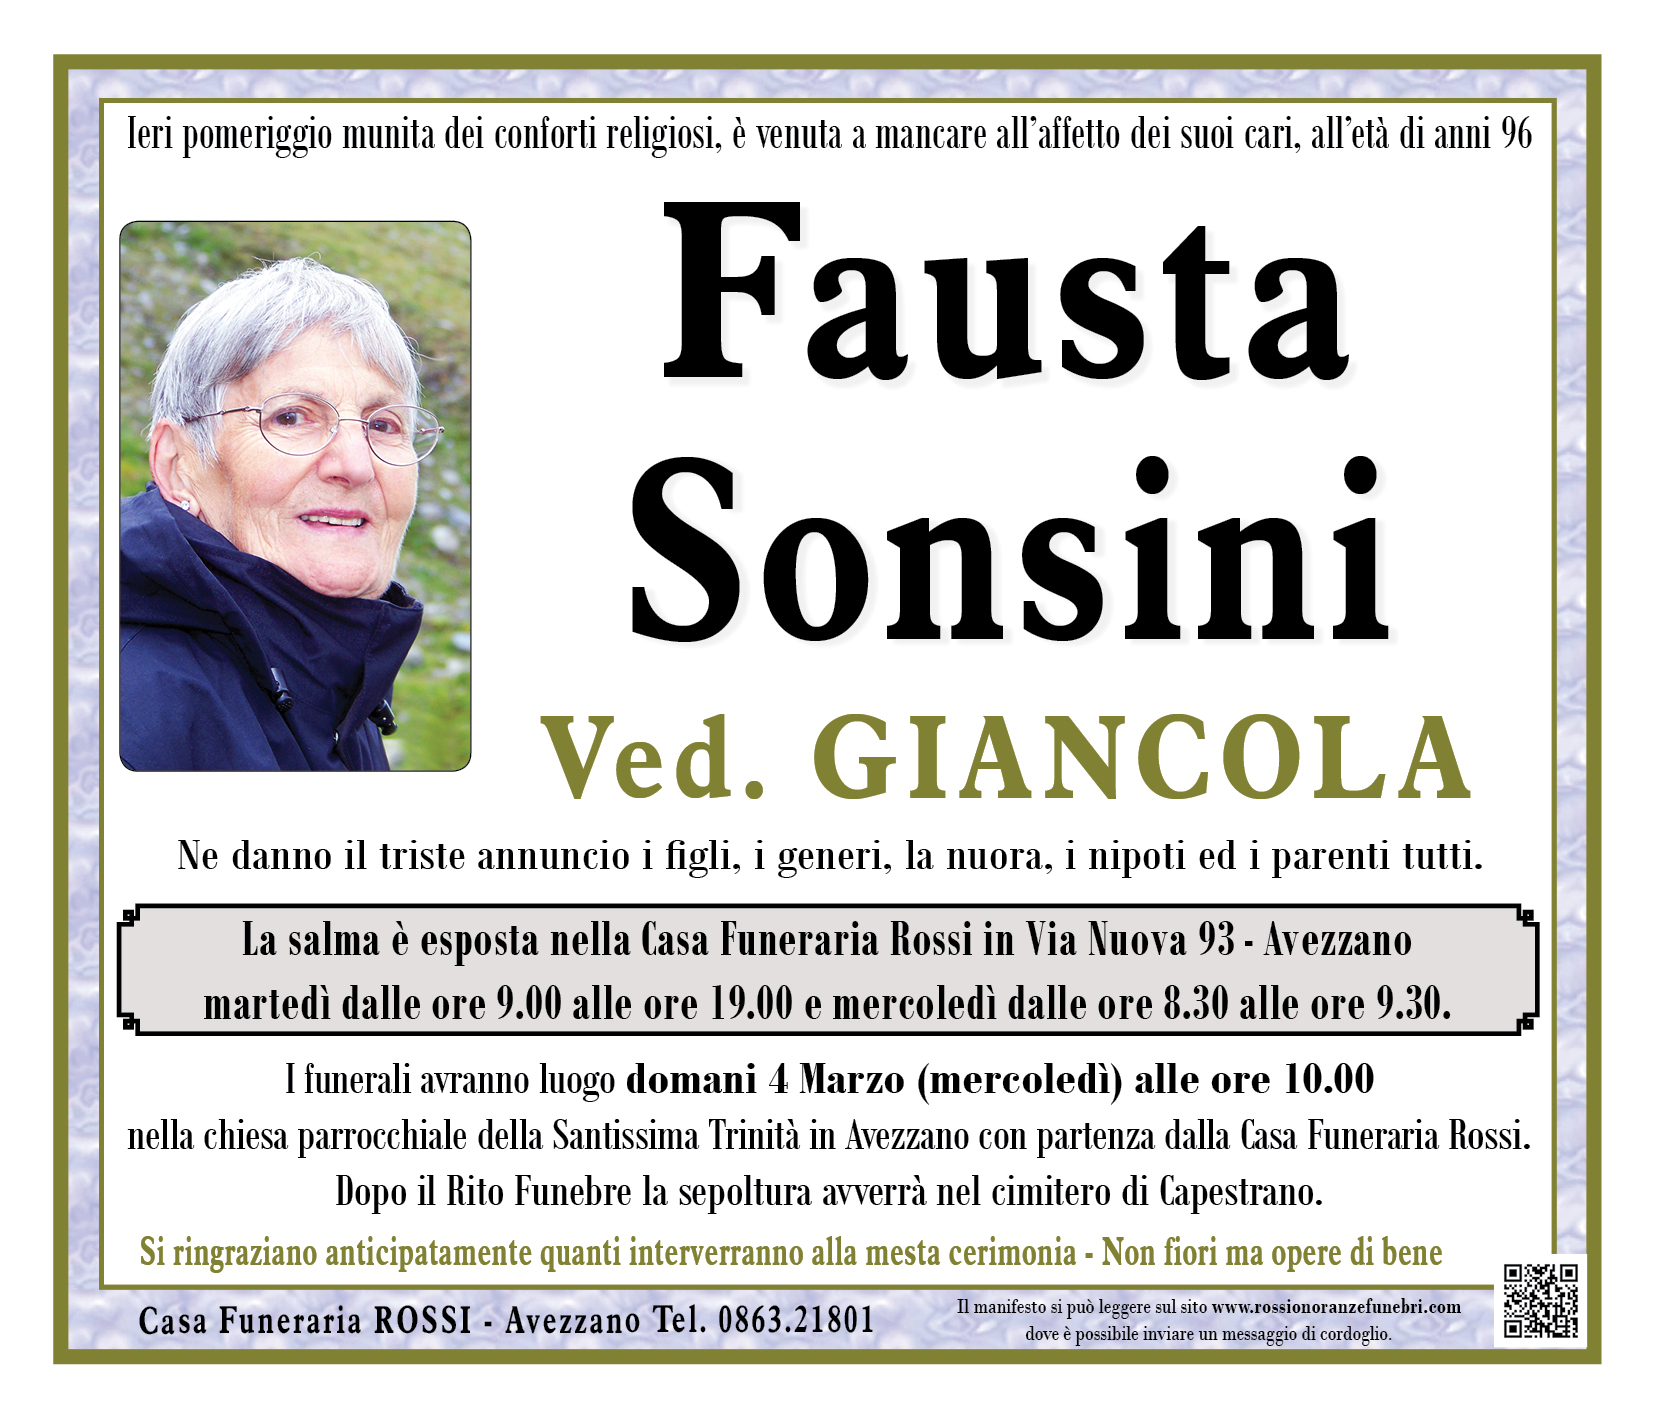 Fausta Sonsini